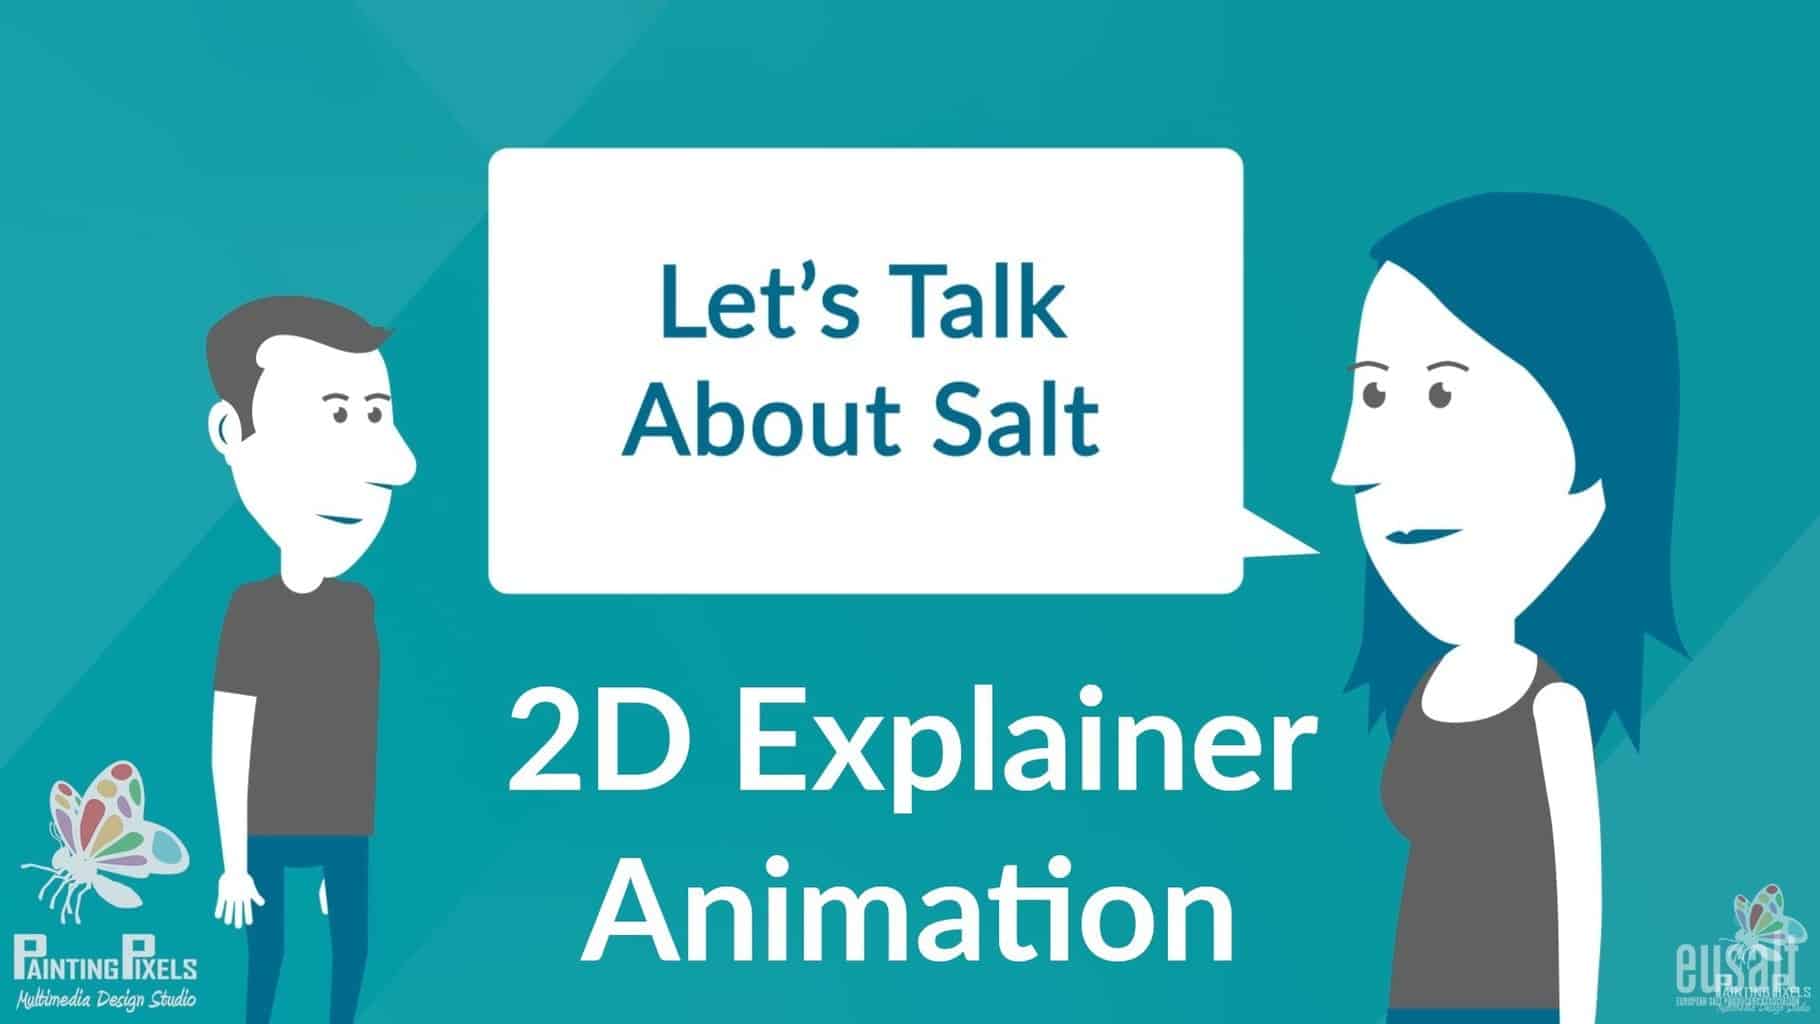 d explainer animation eusalt salt painting pixels digital marketing agency ipswich animation web graphic design suffolk great britain